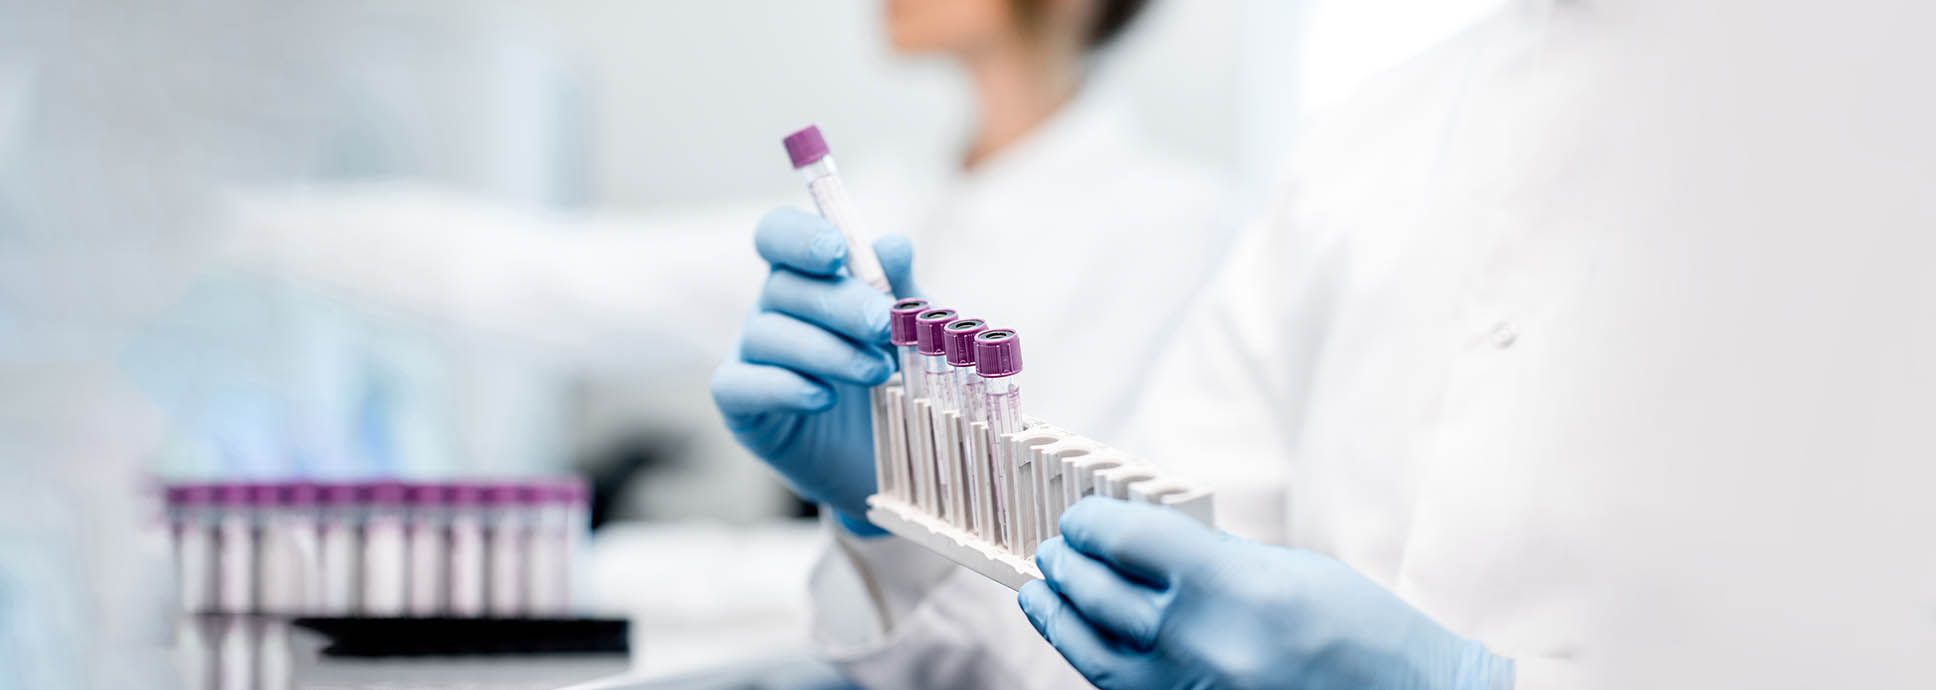 Consolidation of laboratory testing